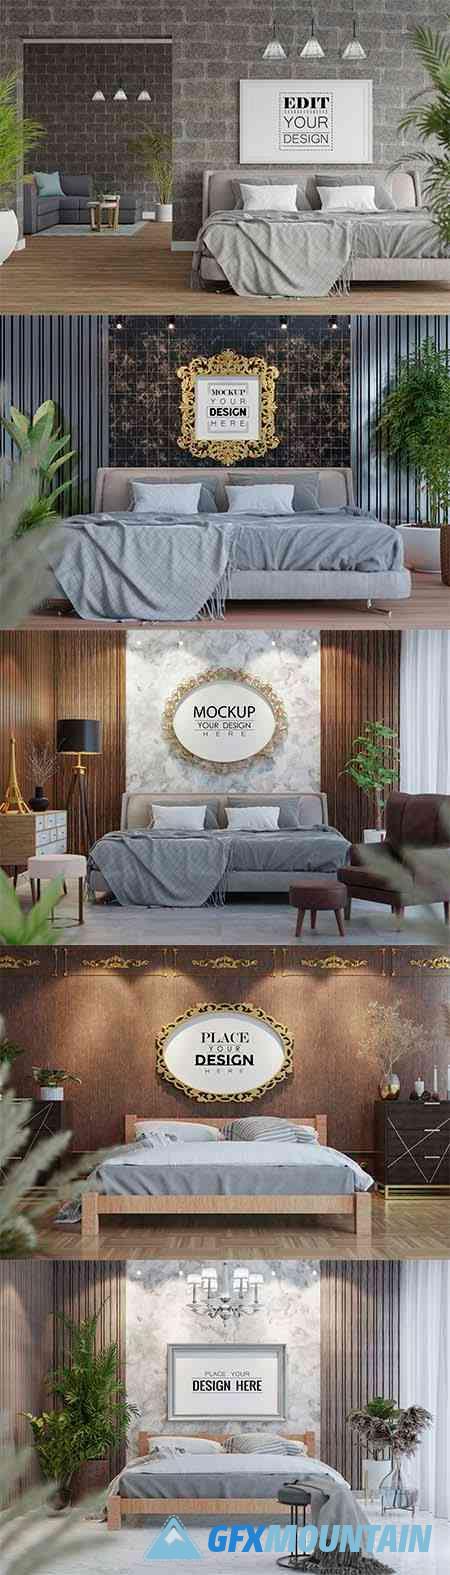 Poster frame mockup interior in a bedroom